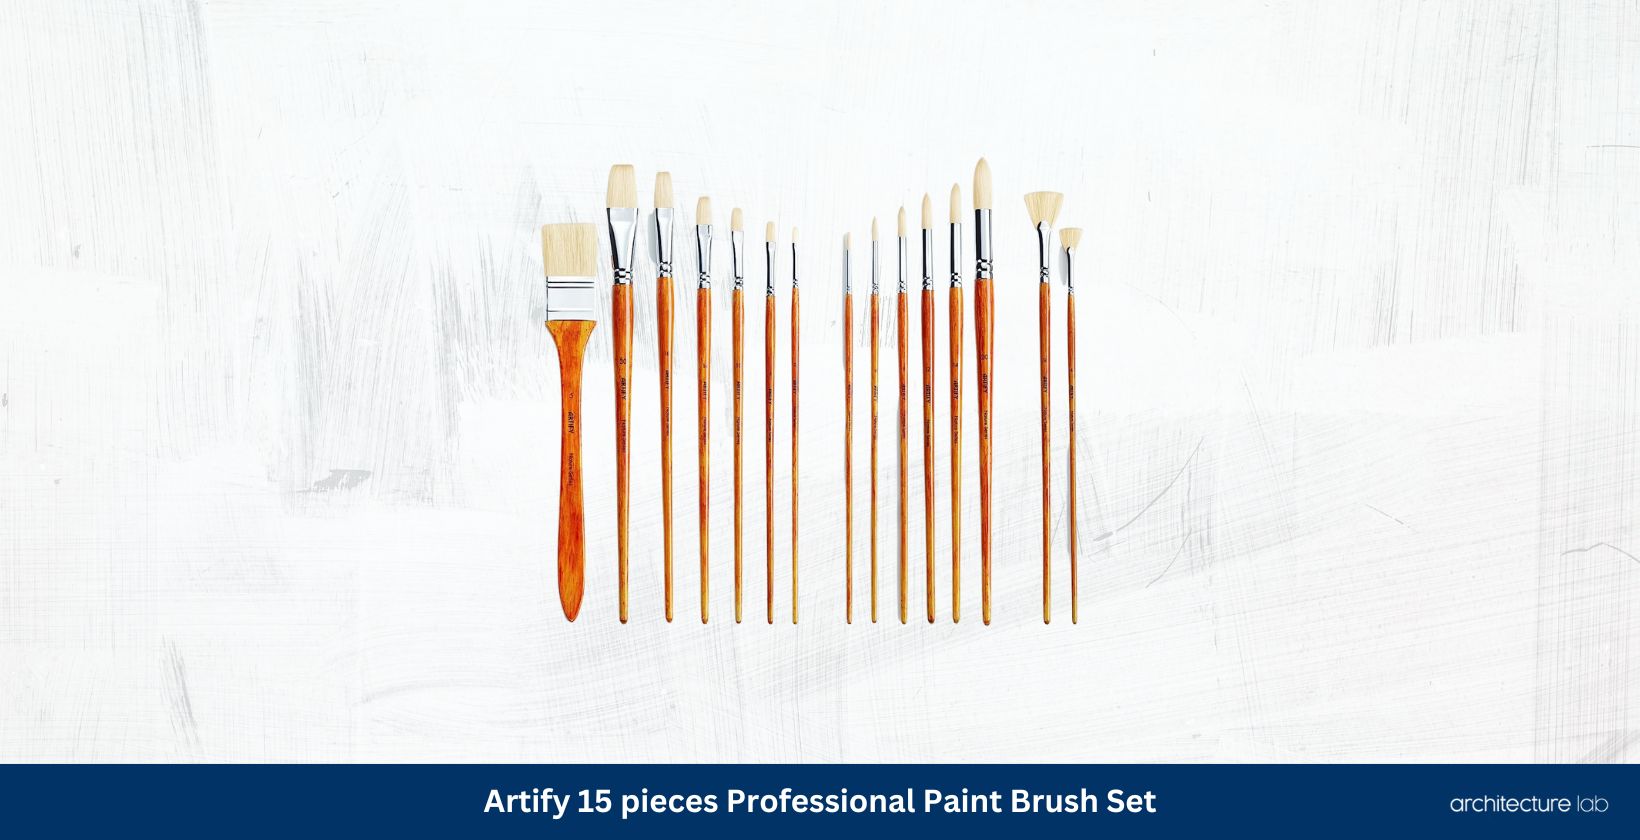 Artify 15 pieces professional paint brush set